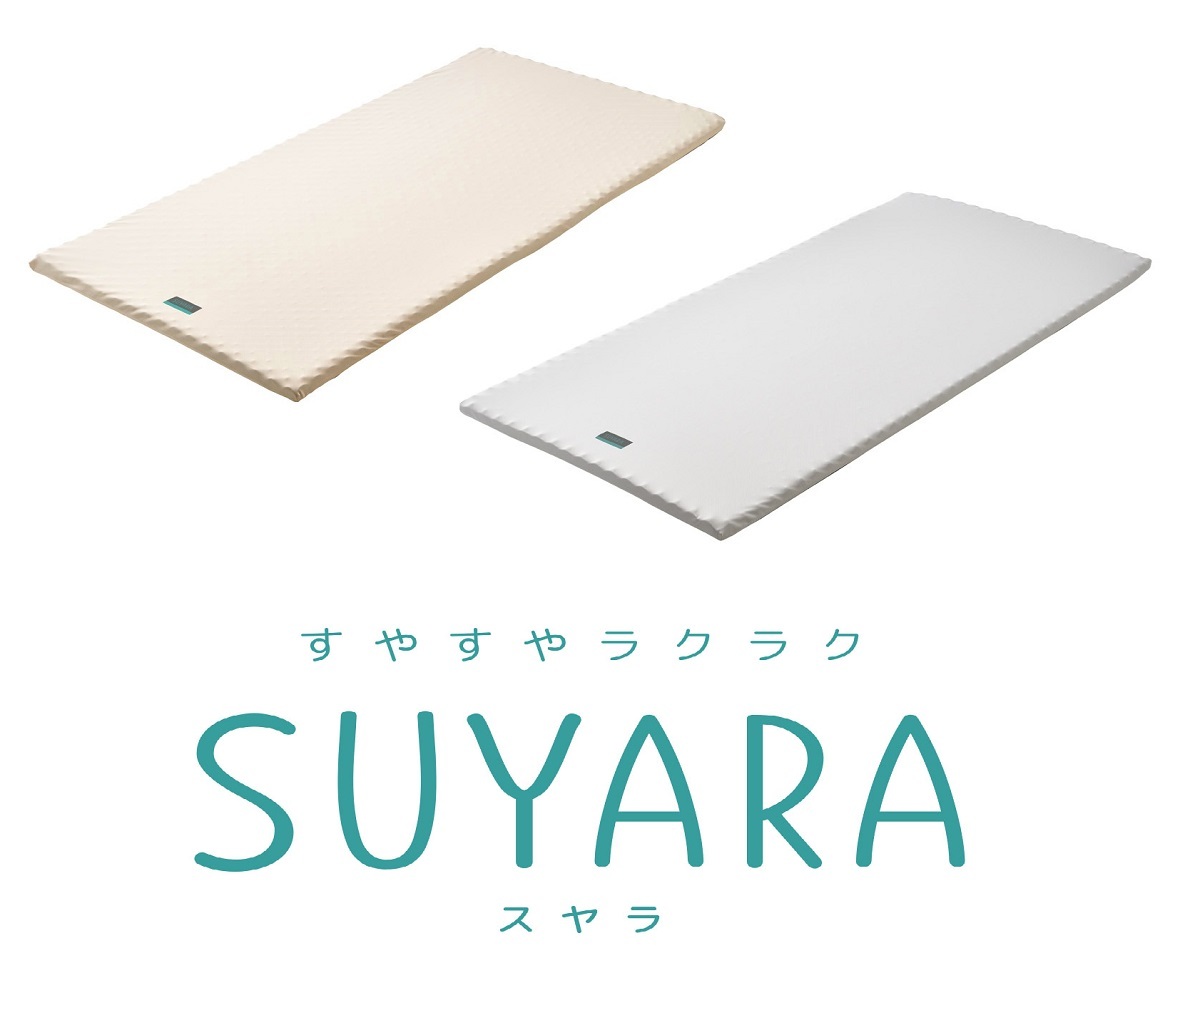 SUYARA マットレスパッド 3.5cm （SU-01） Sサイズ 2460-10607 （ゴールド/シルバー）の商品画像